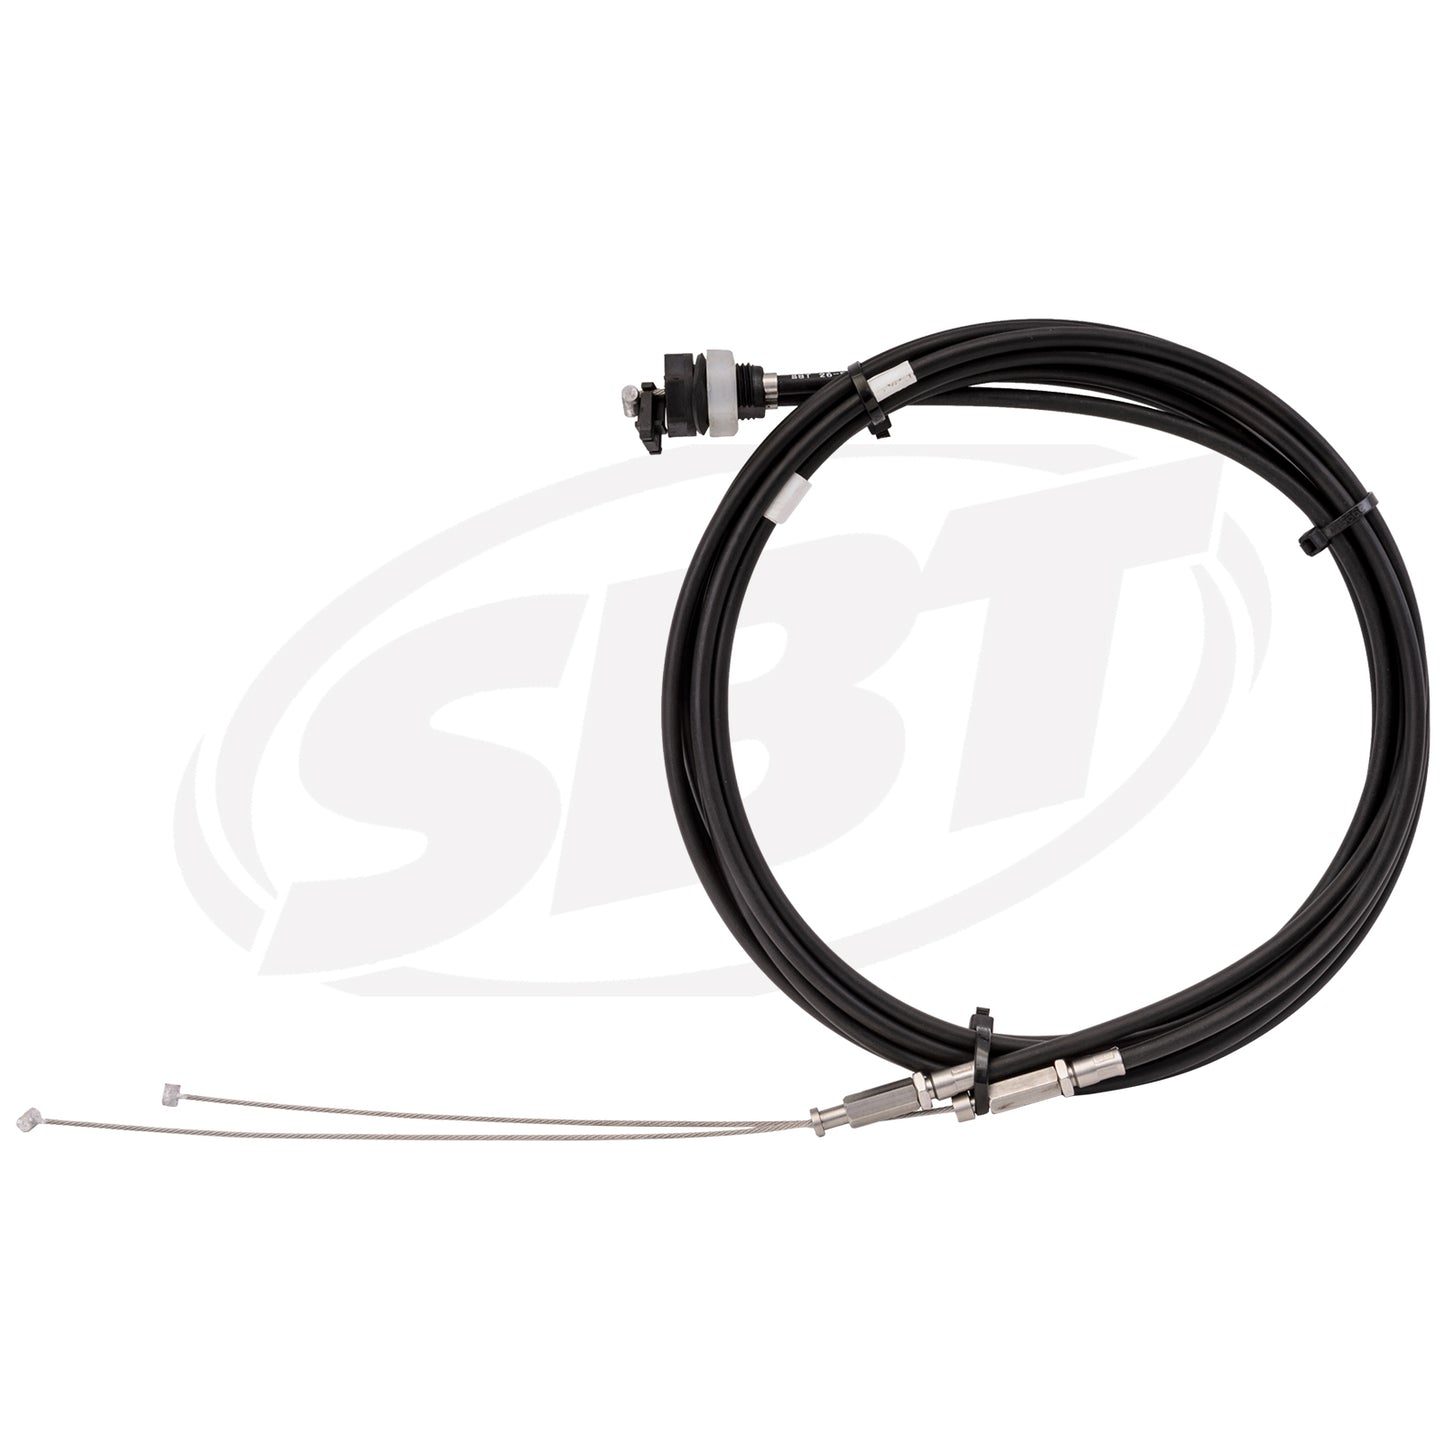 SBT Yamaha Trim Cable fits F2S-6153E-00-00 1.8L